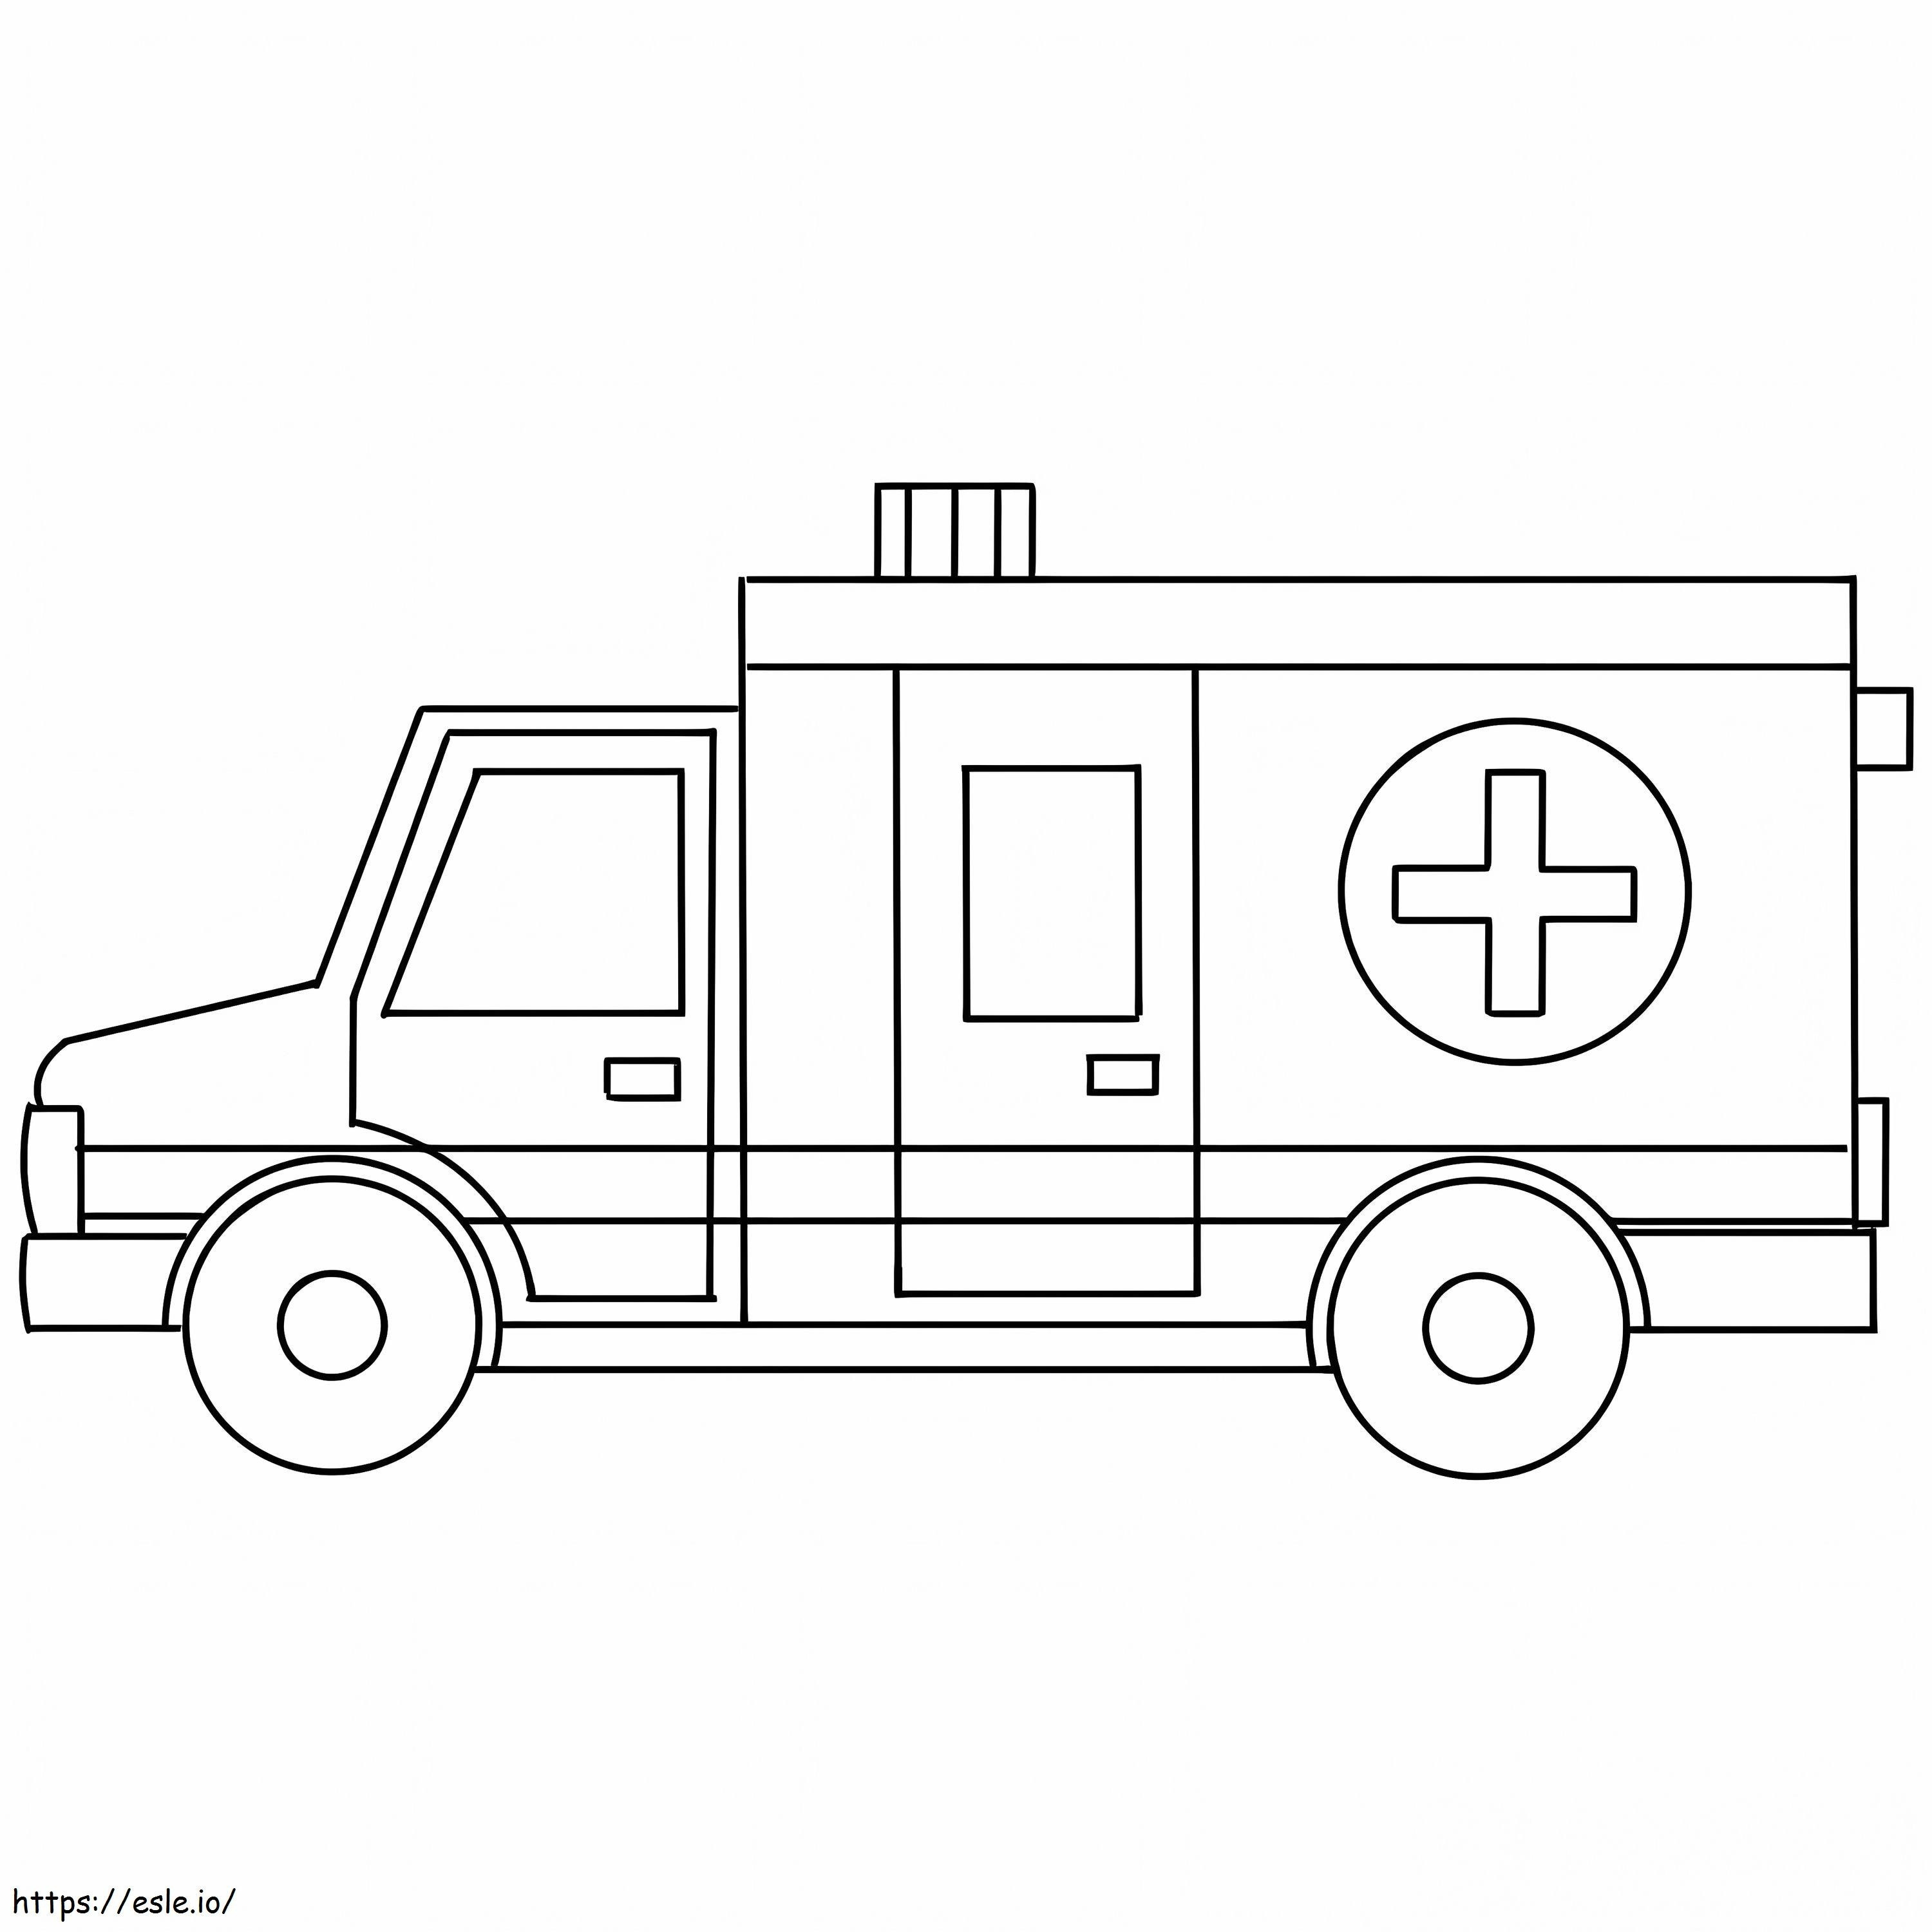 Perfect Ambulance coloring page